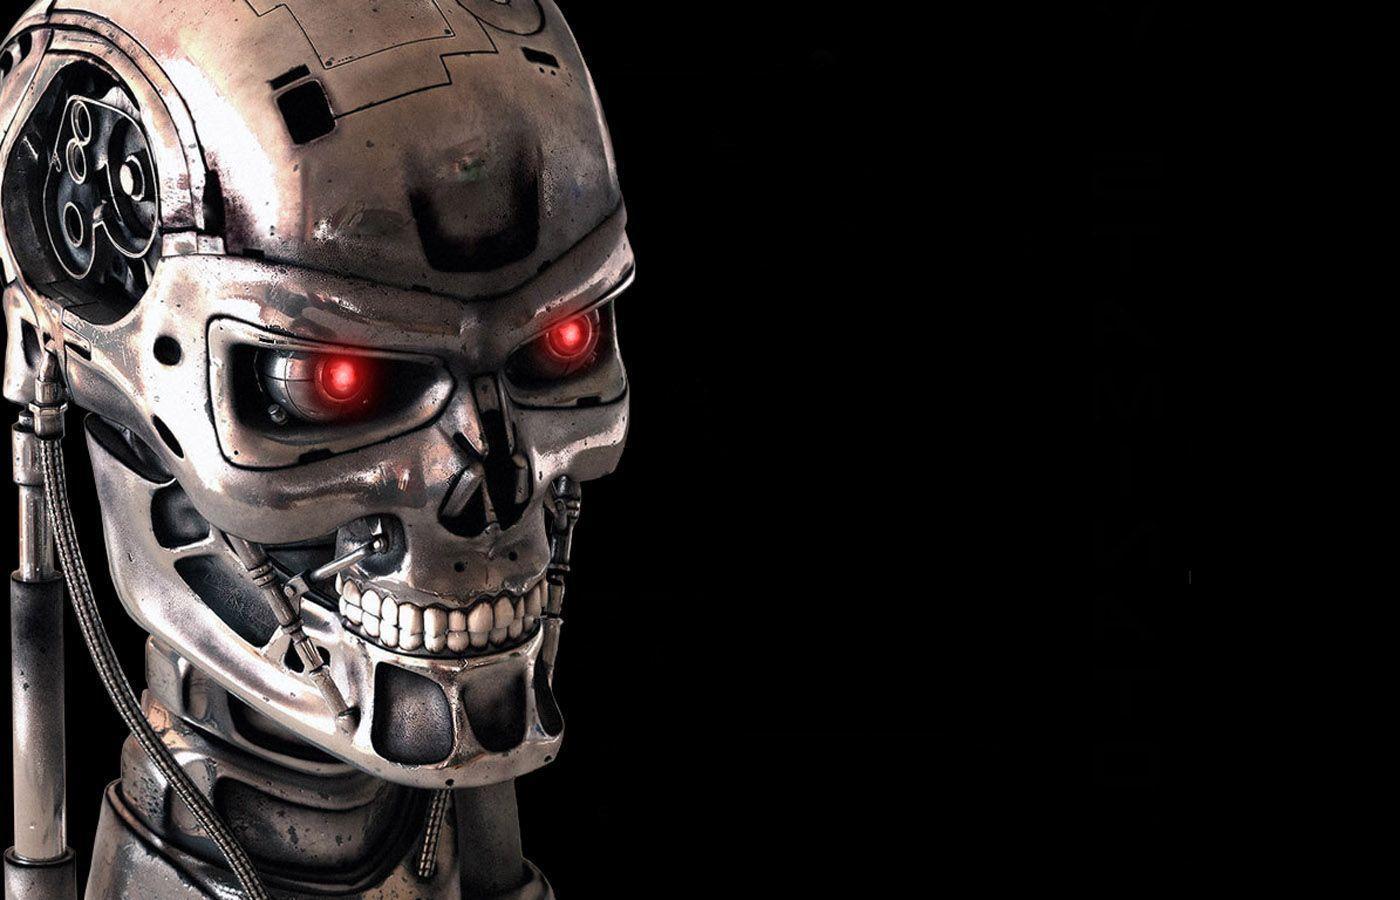 Terminator Wallpaper, iPhone Wallpaper, Facebook Cover, Twitter